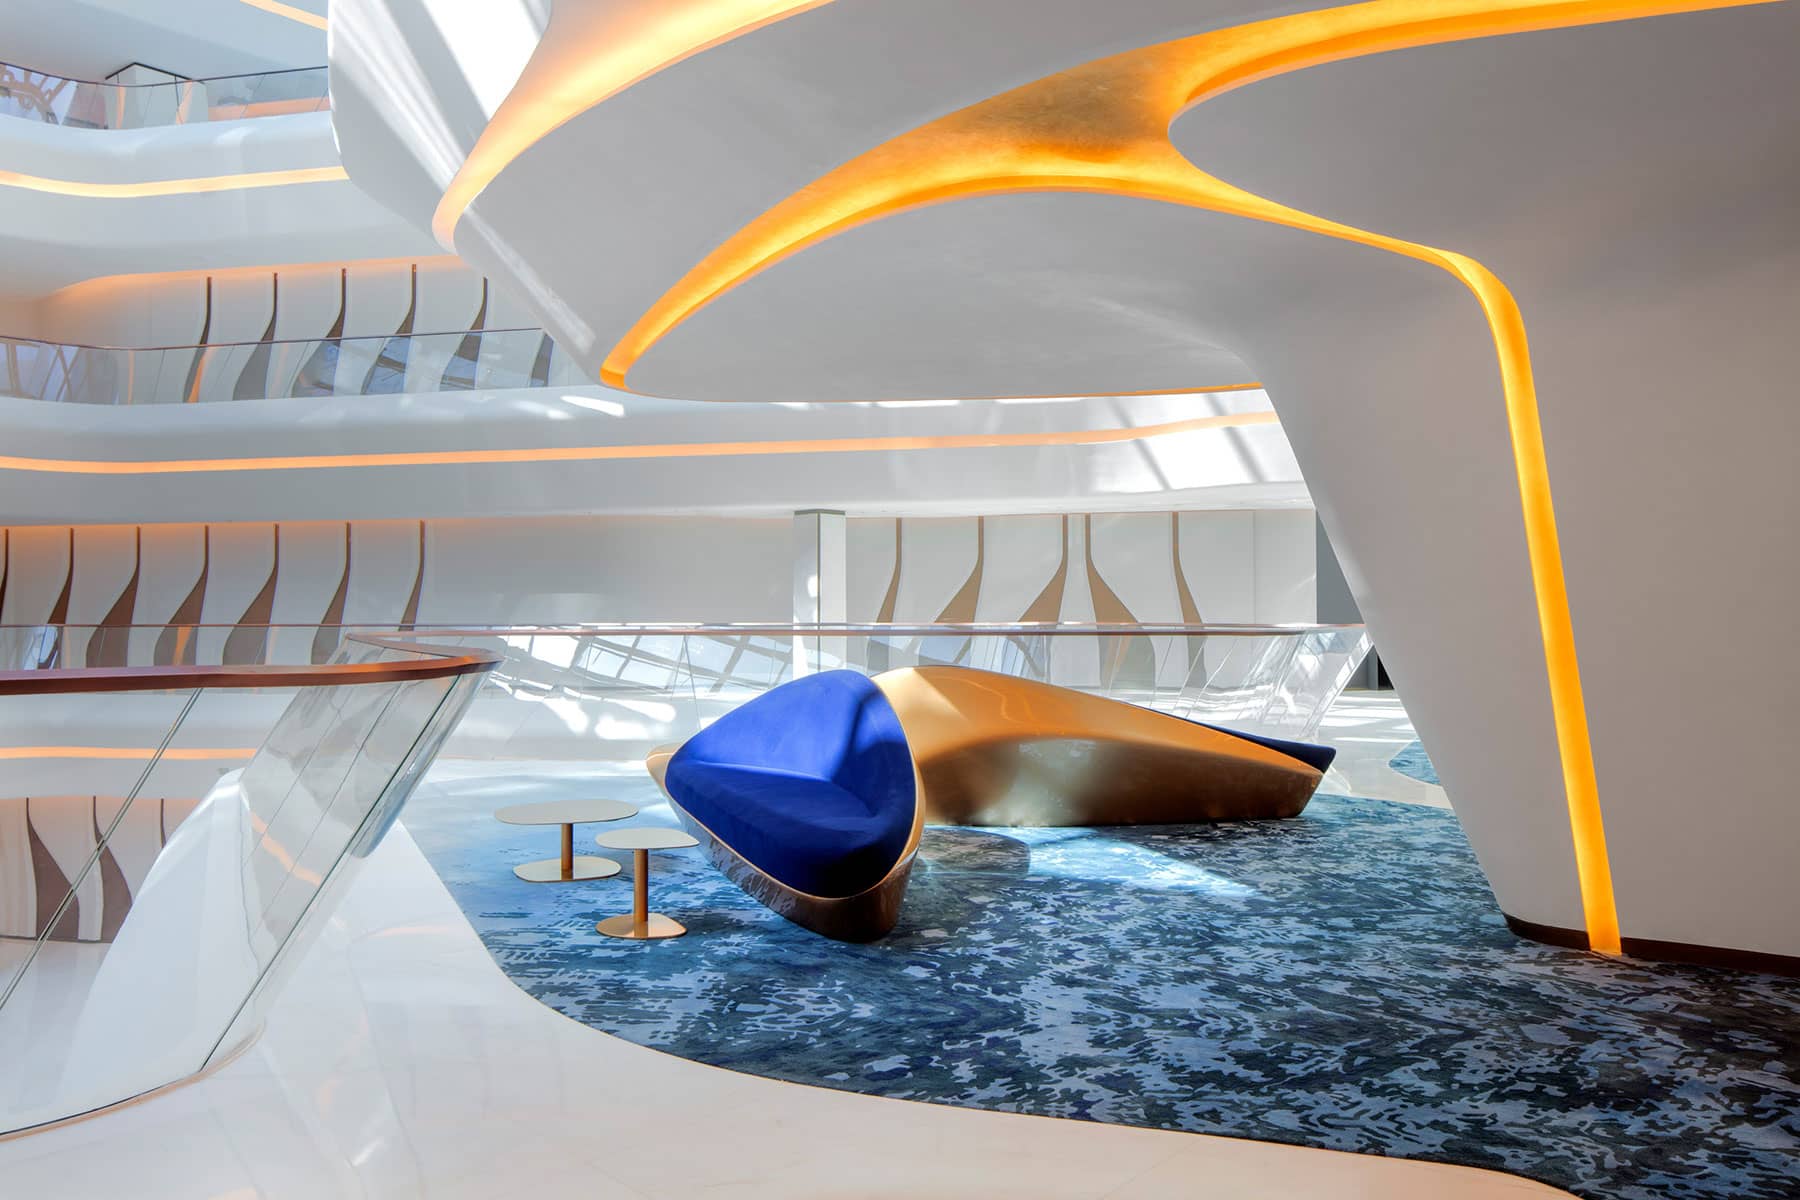 Architecture Photography Dubai: Intricate detailing by architect Zaha Hadid at My by Melia Hotel, Dubai.